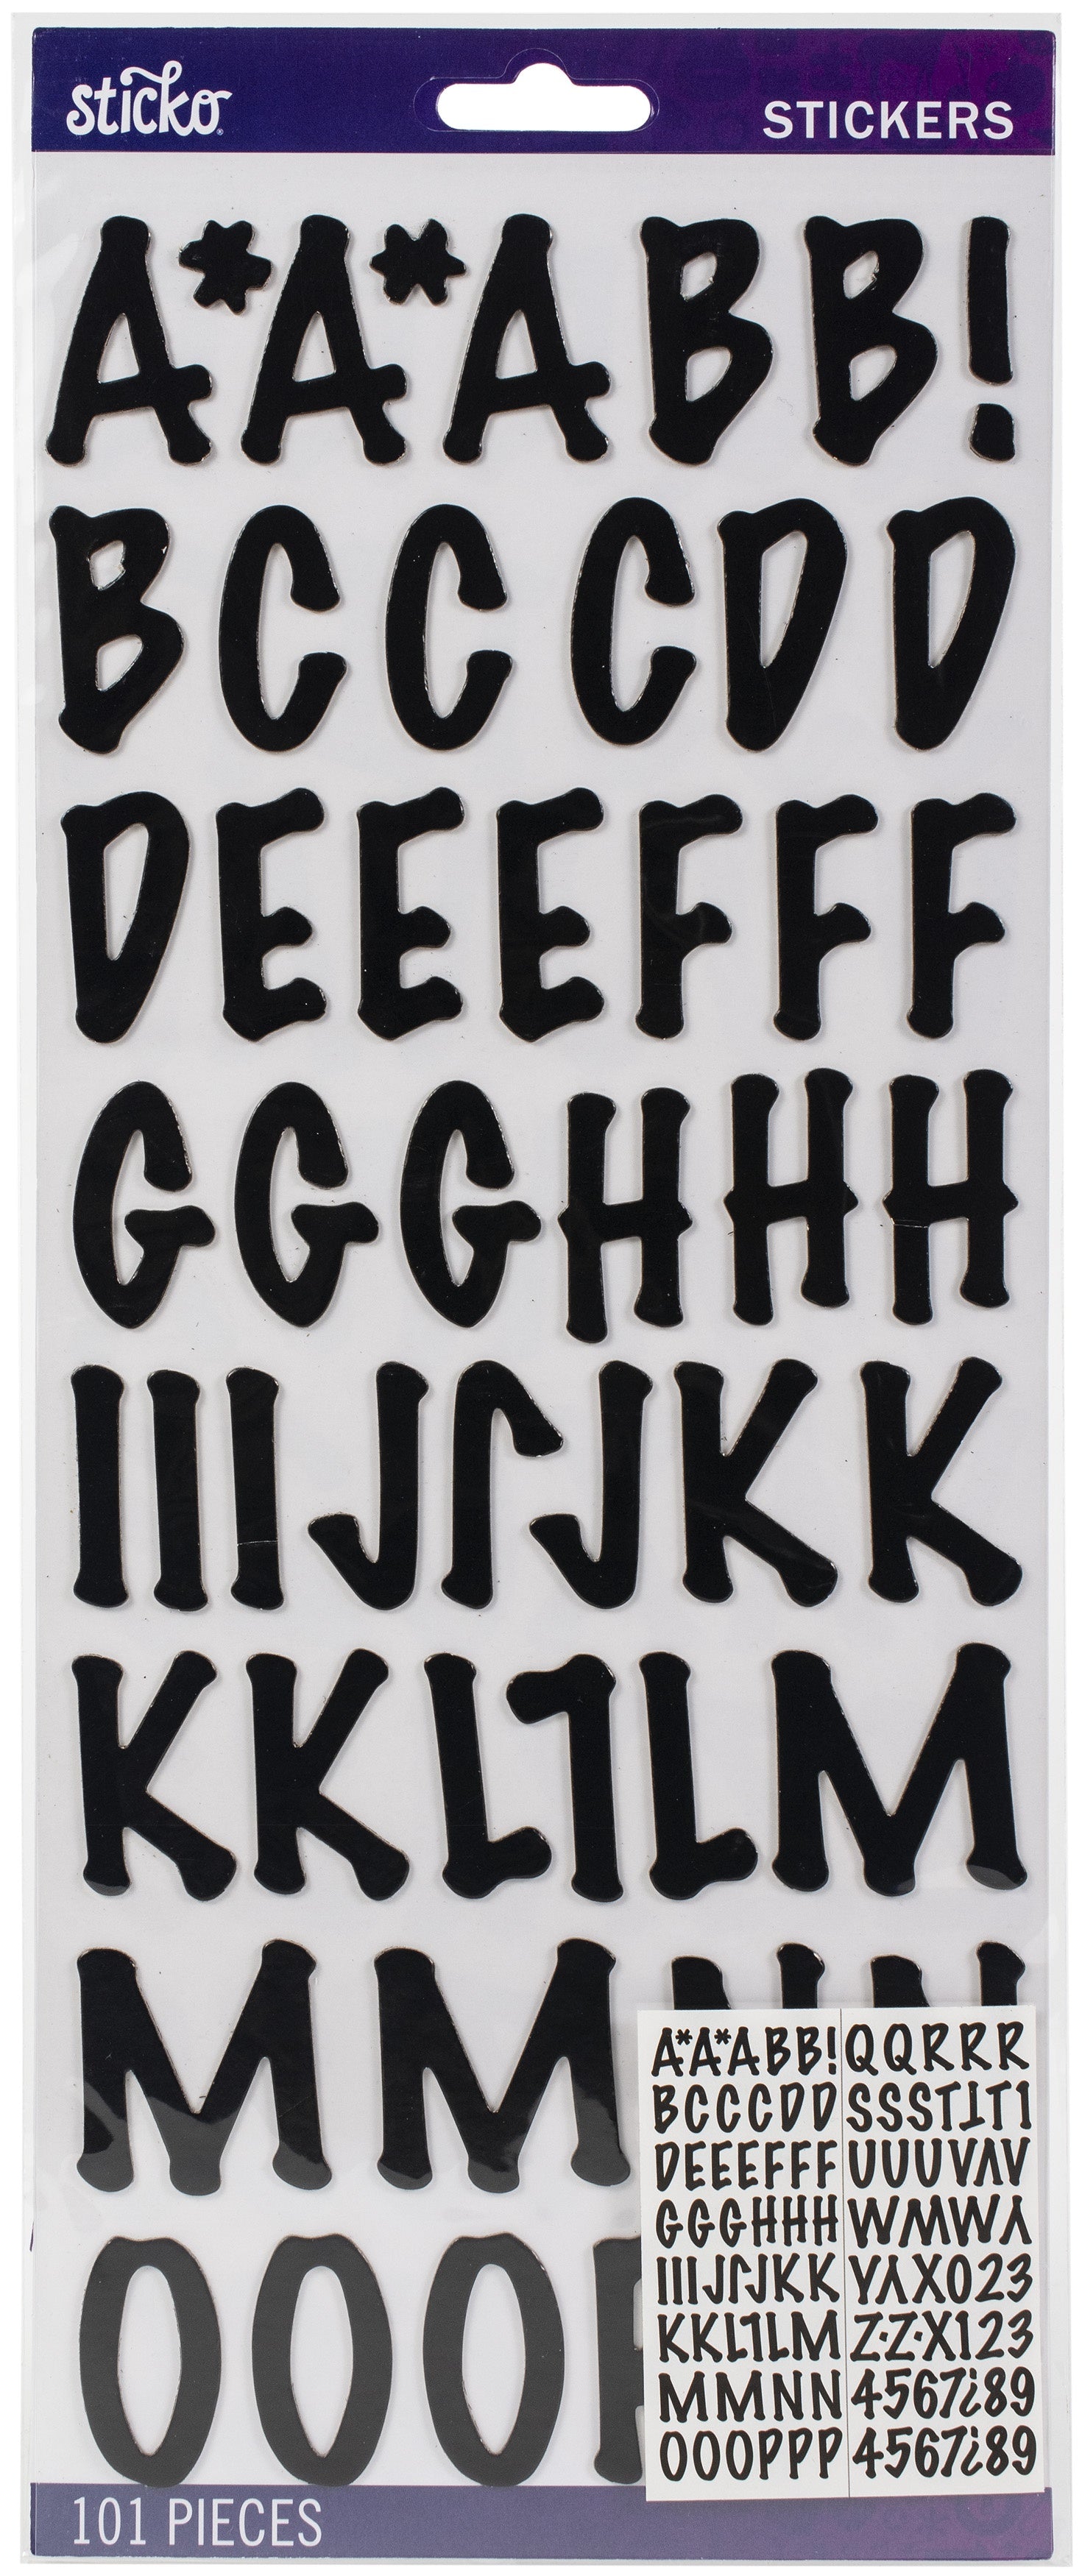 Sticko Black Distressed Octavian Small Alphabet Stickers